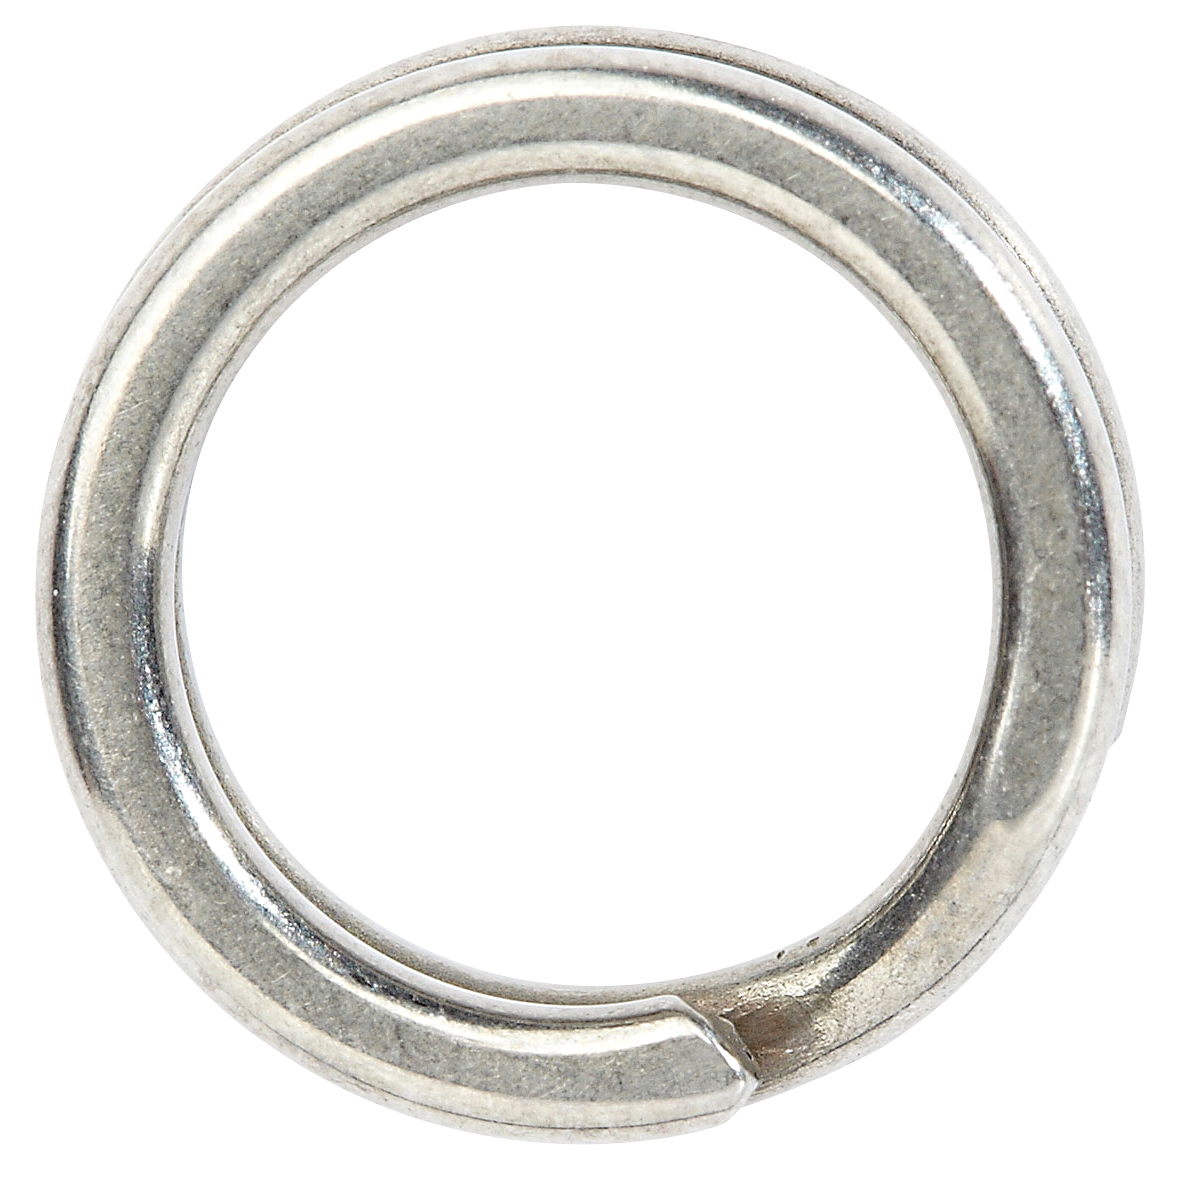 https://images.askari-sport.com/en/product/1/large/owner-power-split-rings.jpg